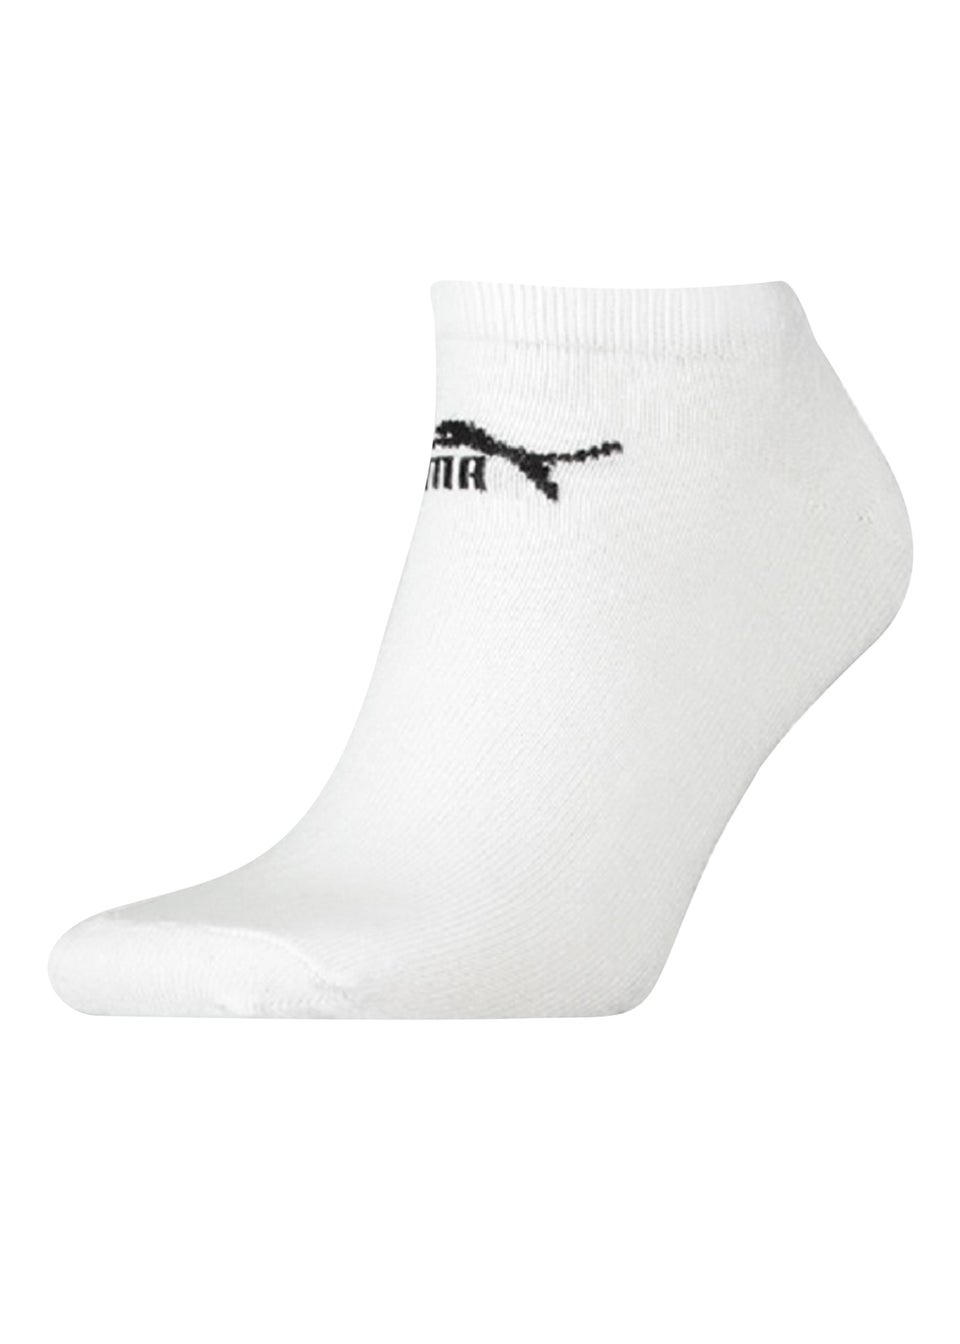 Puma White Trainer Socks (Pack of 3)